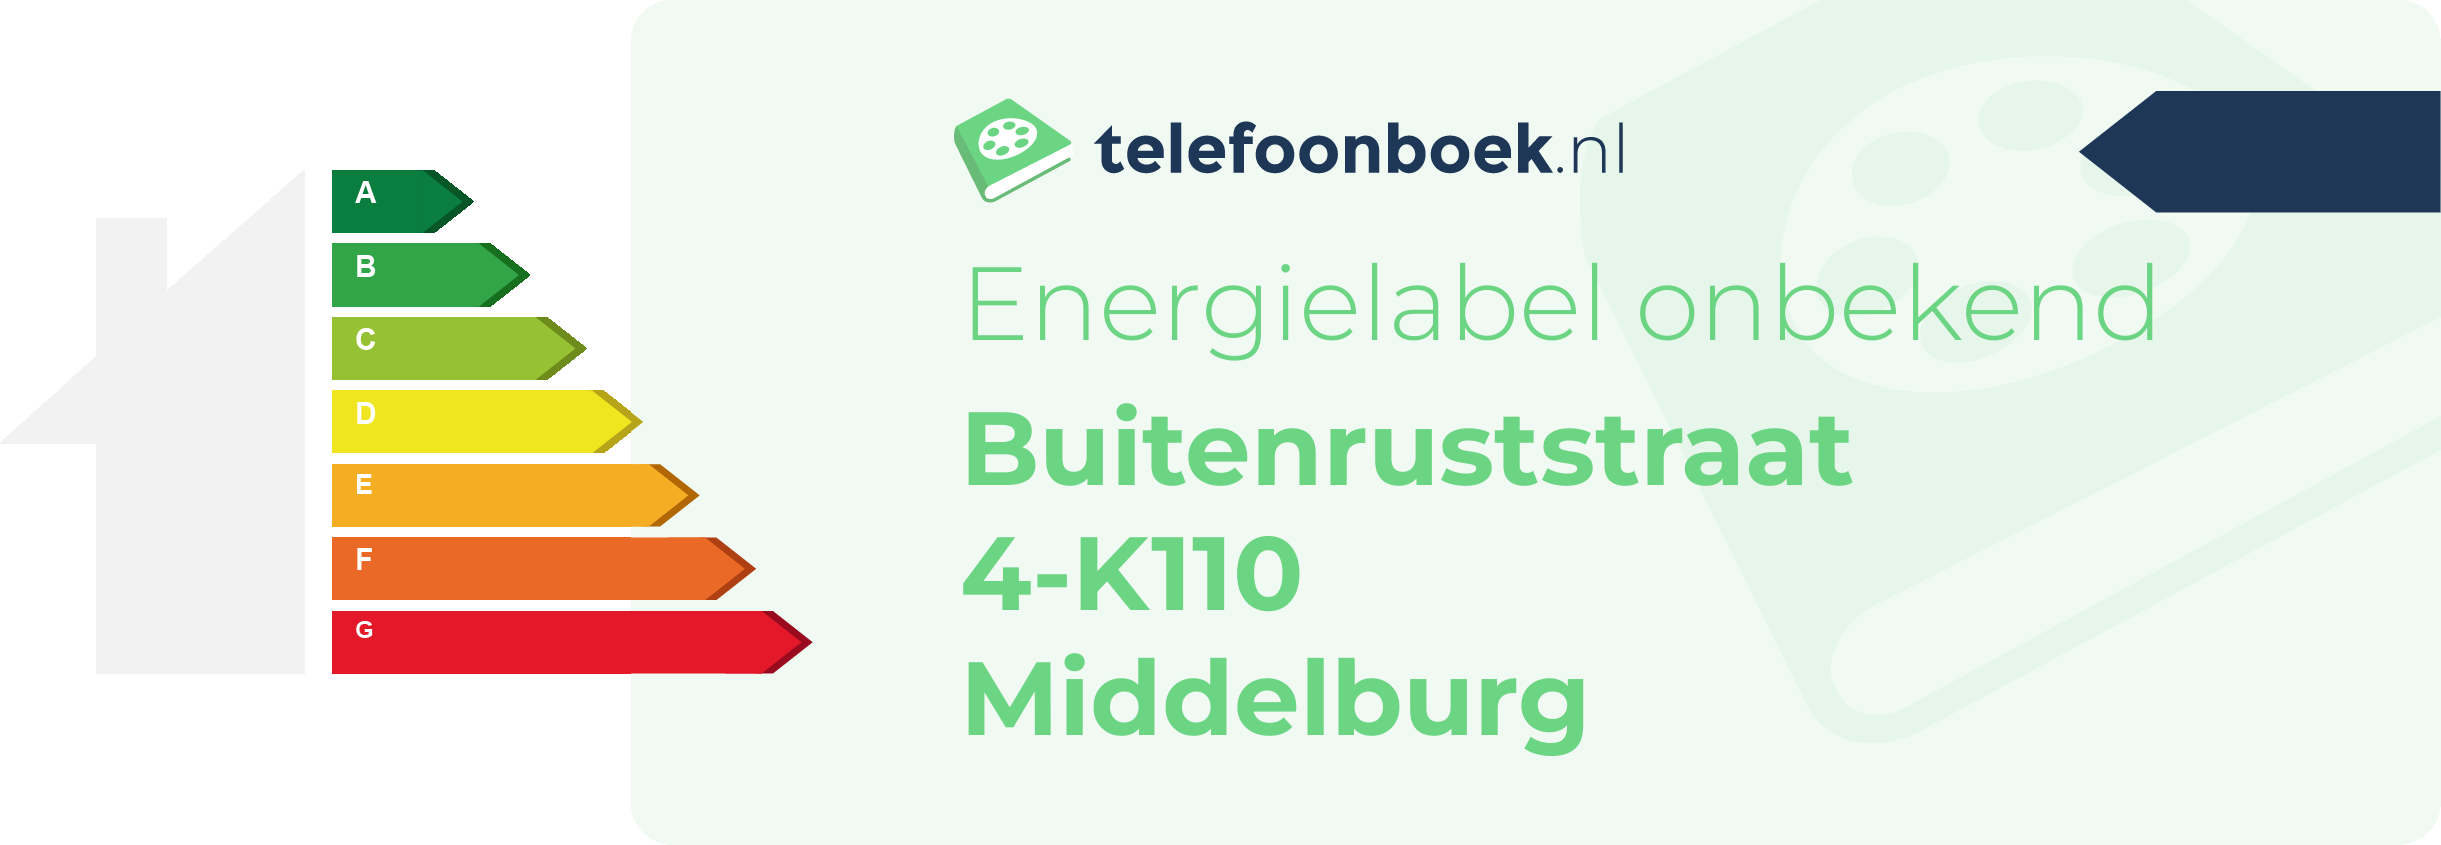 Energielabel Buitenruststraat 4-K110 Middelburg